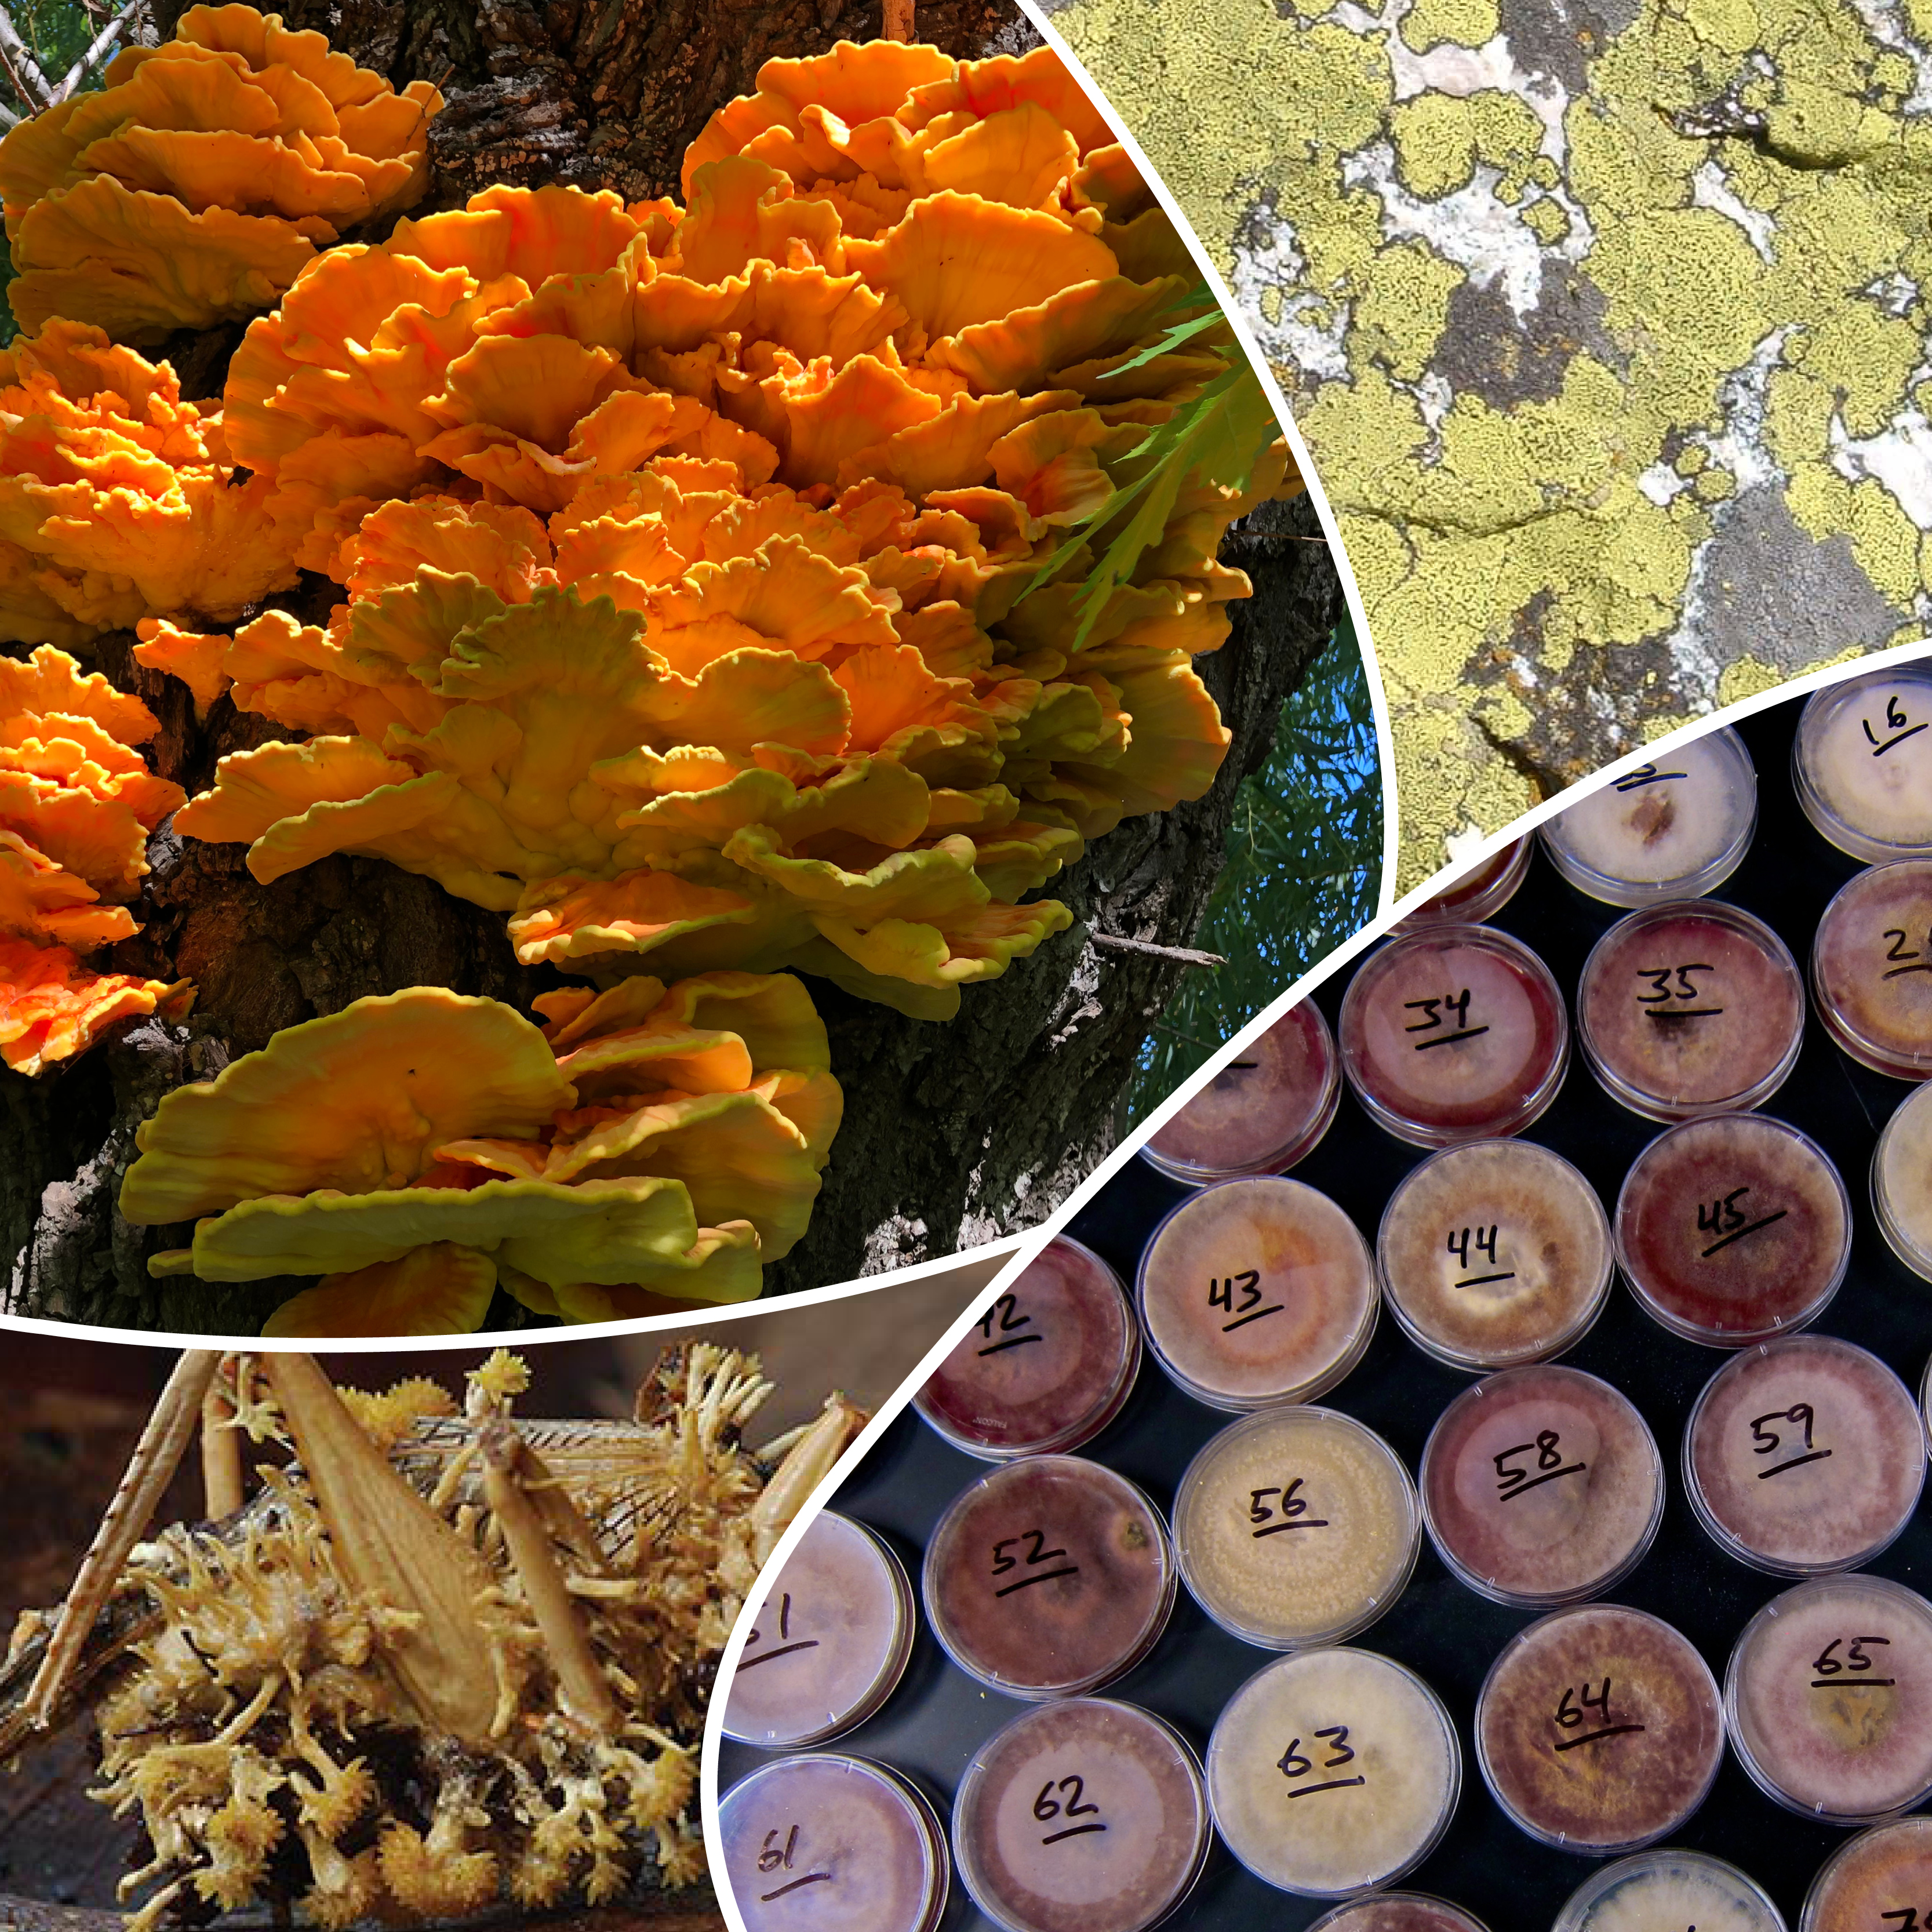 Fungal spotlight: Host-associated microbiomes